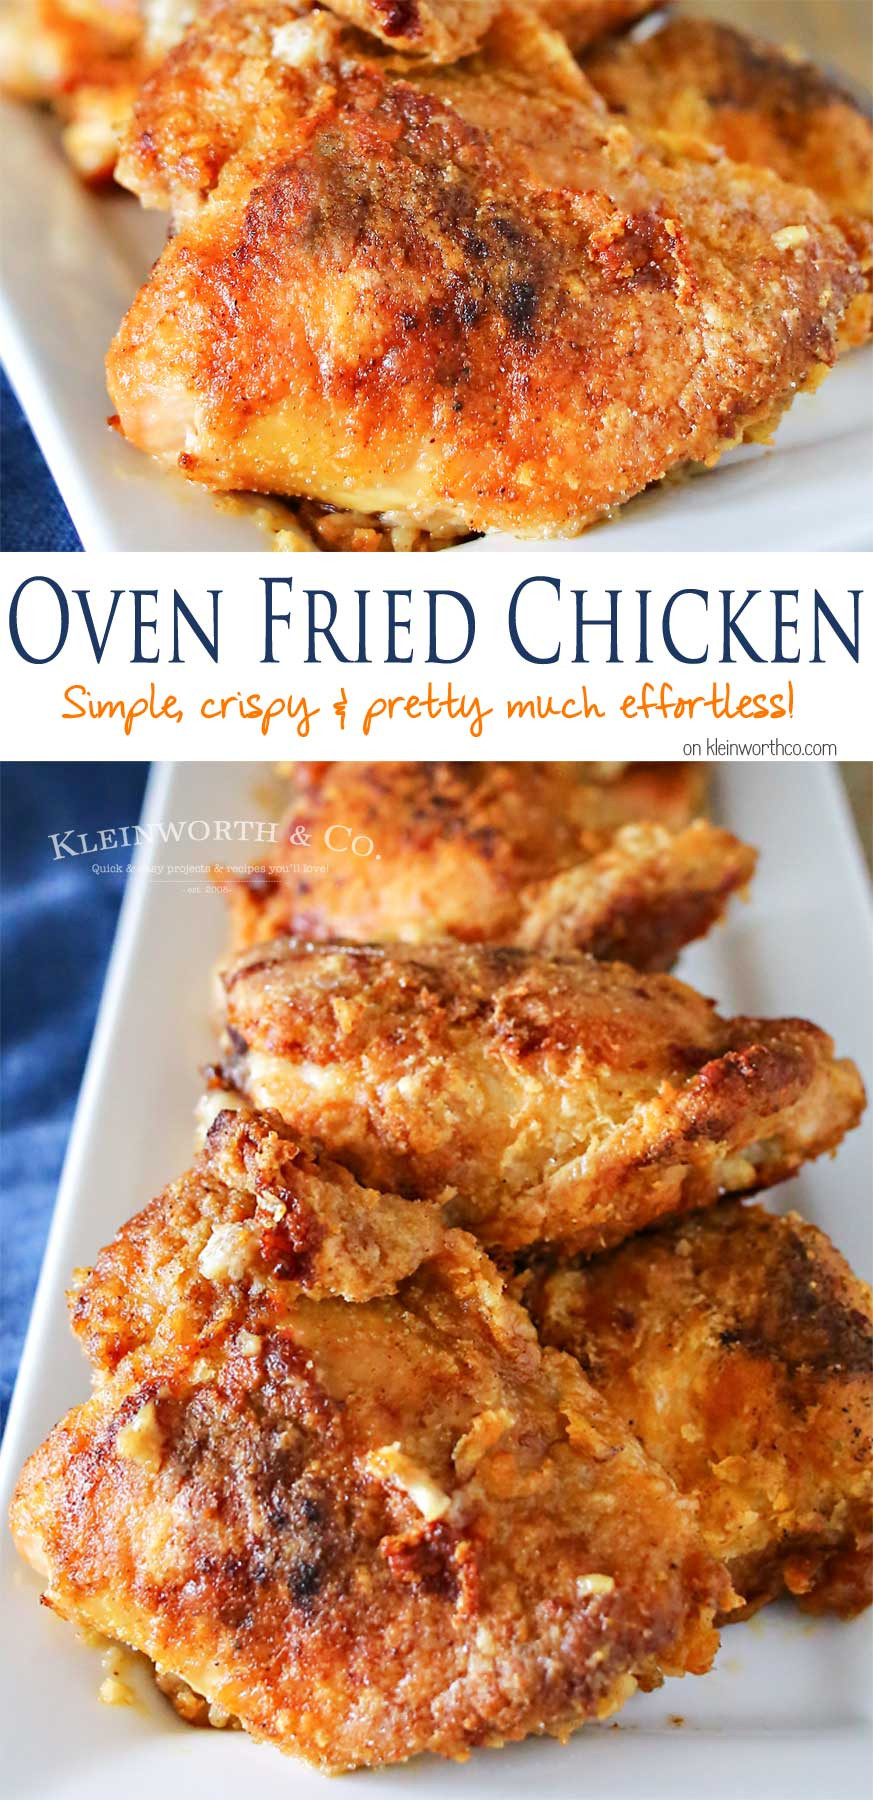 Oven Fried Chicken Recipes
 Oven Fried Chicken Kleinworth & Co